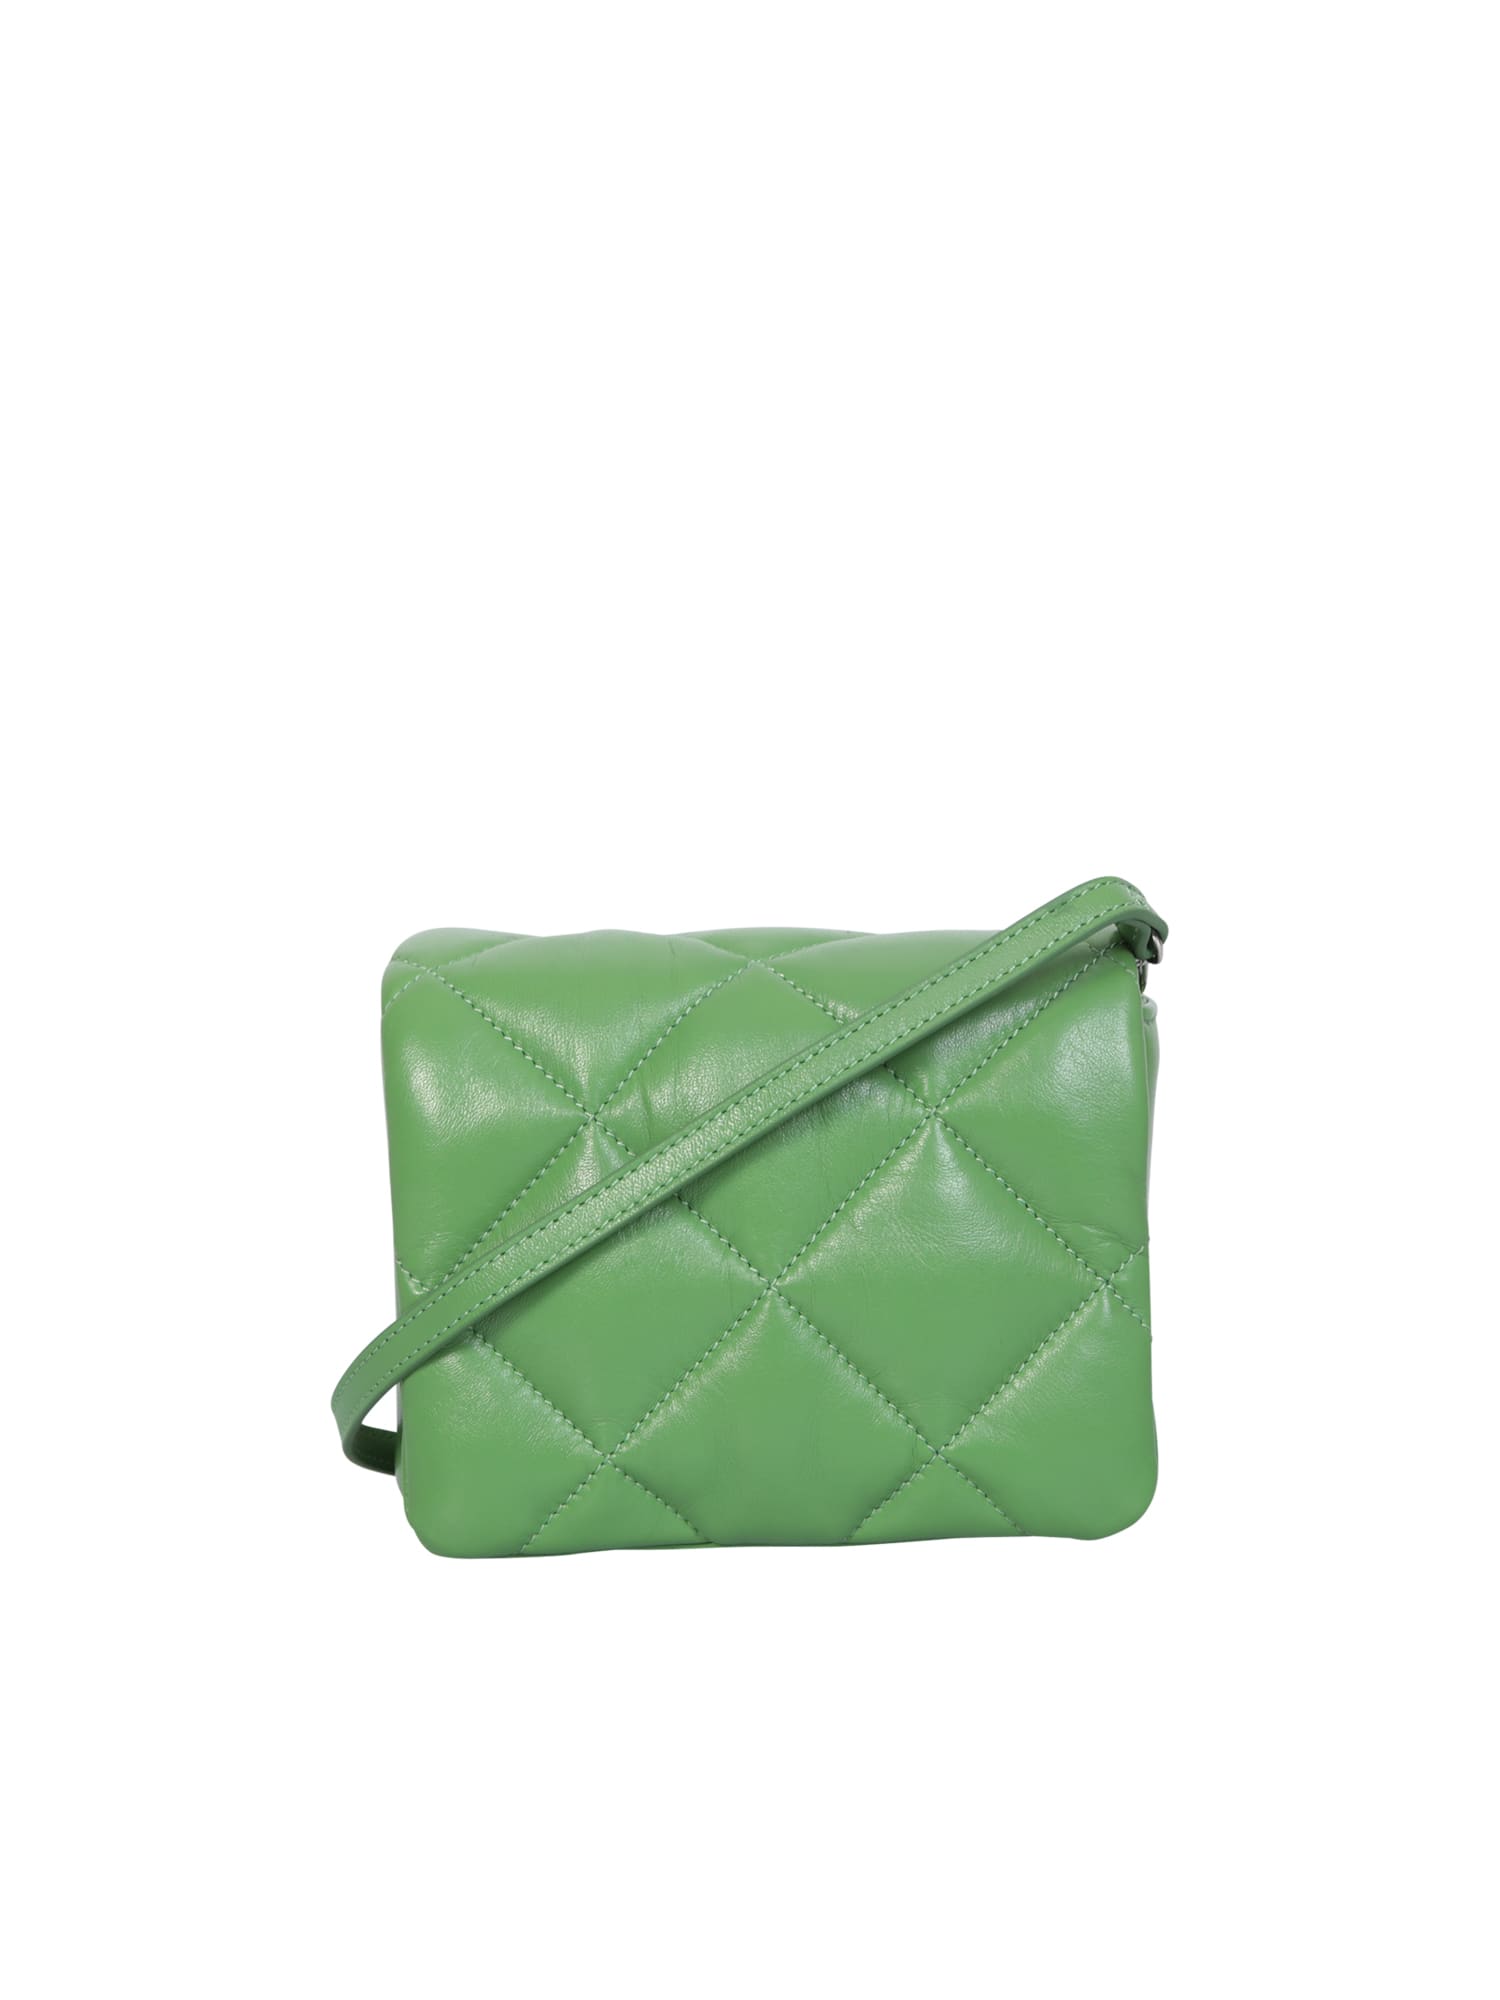 Hestia Small Green Bag